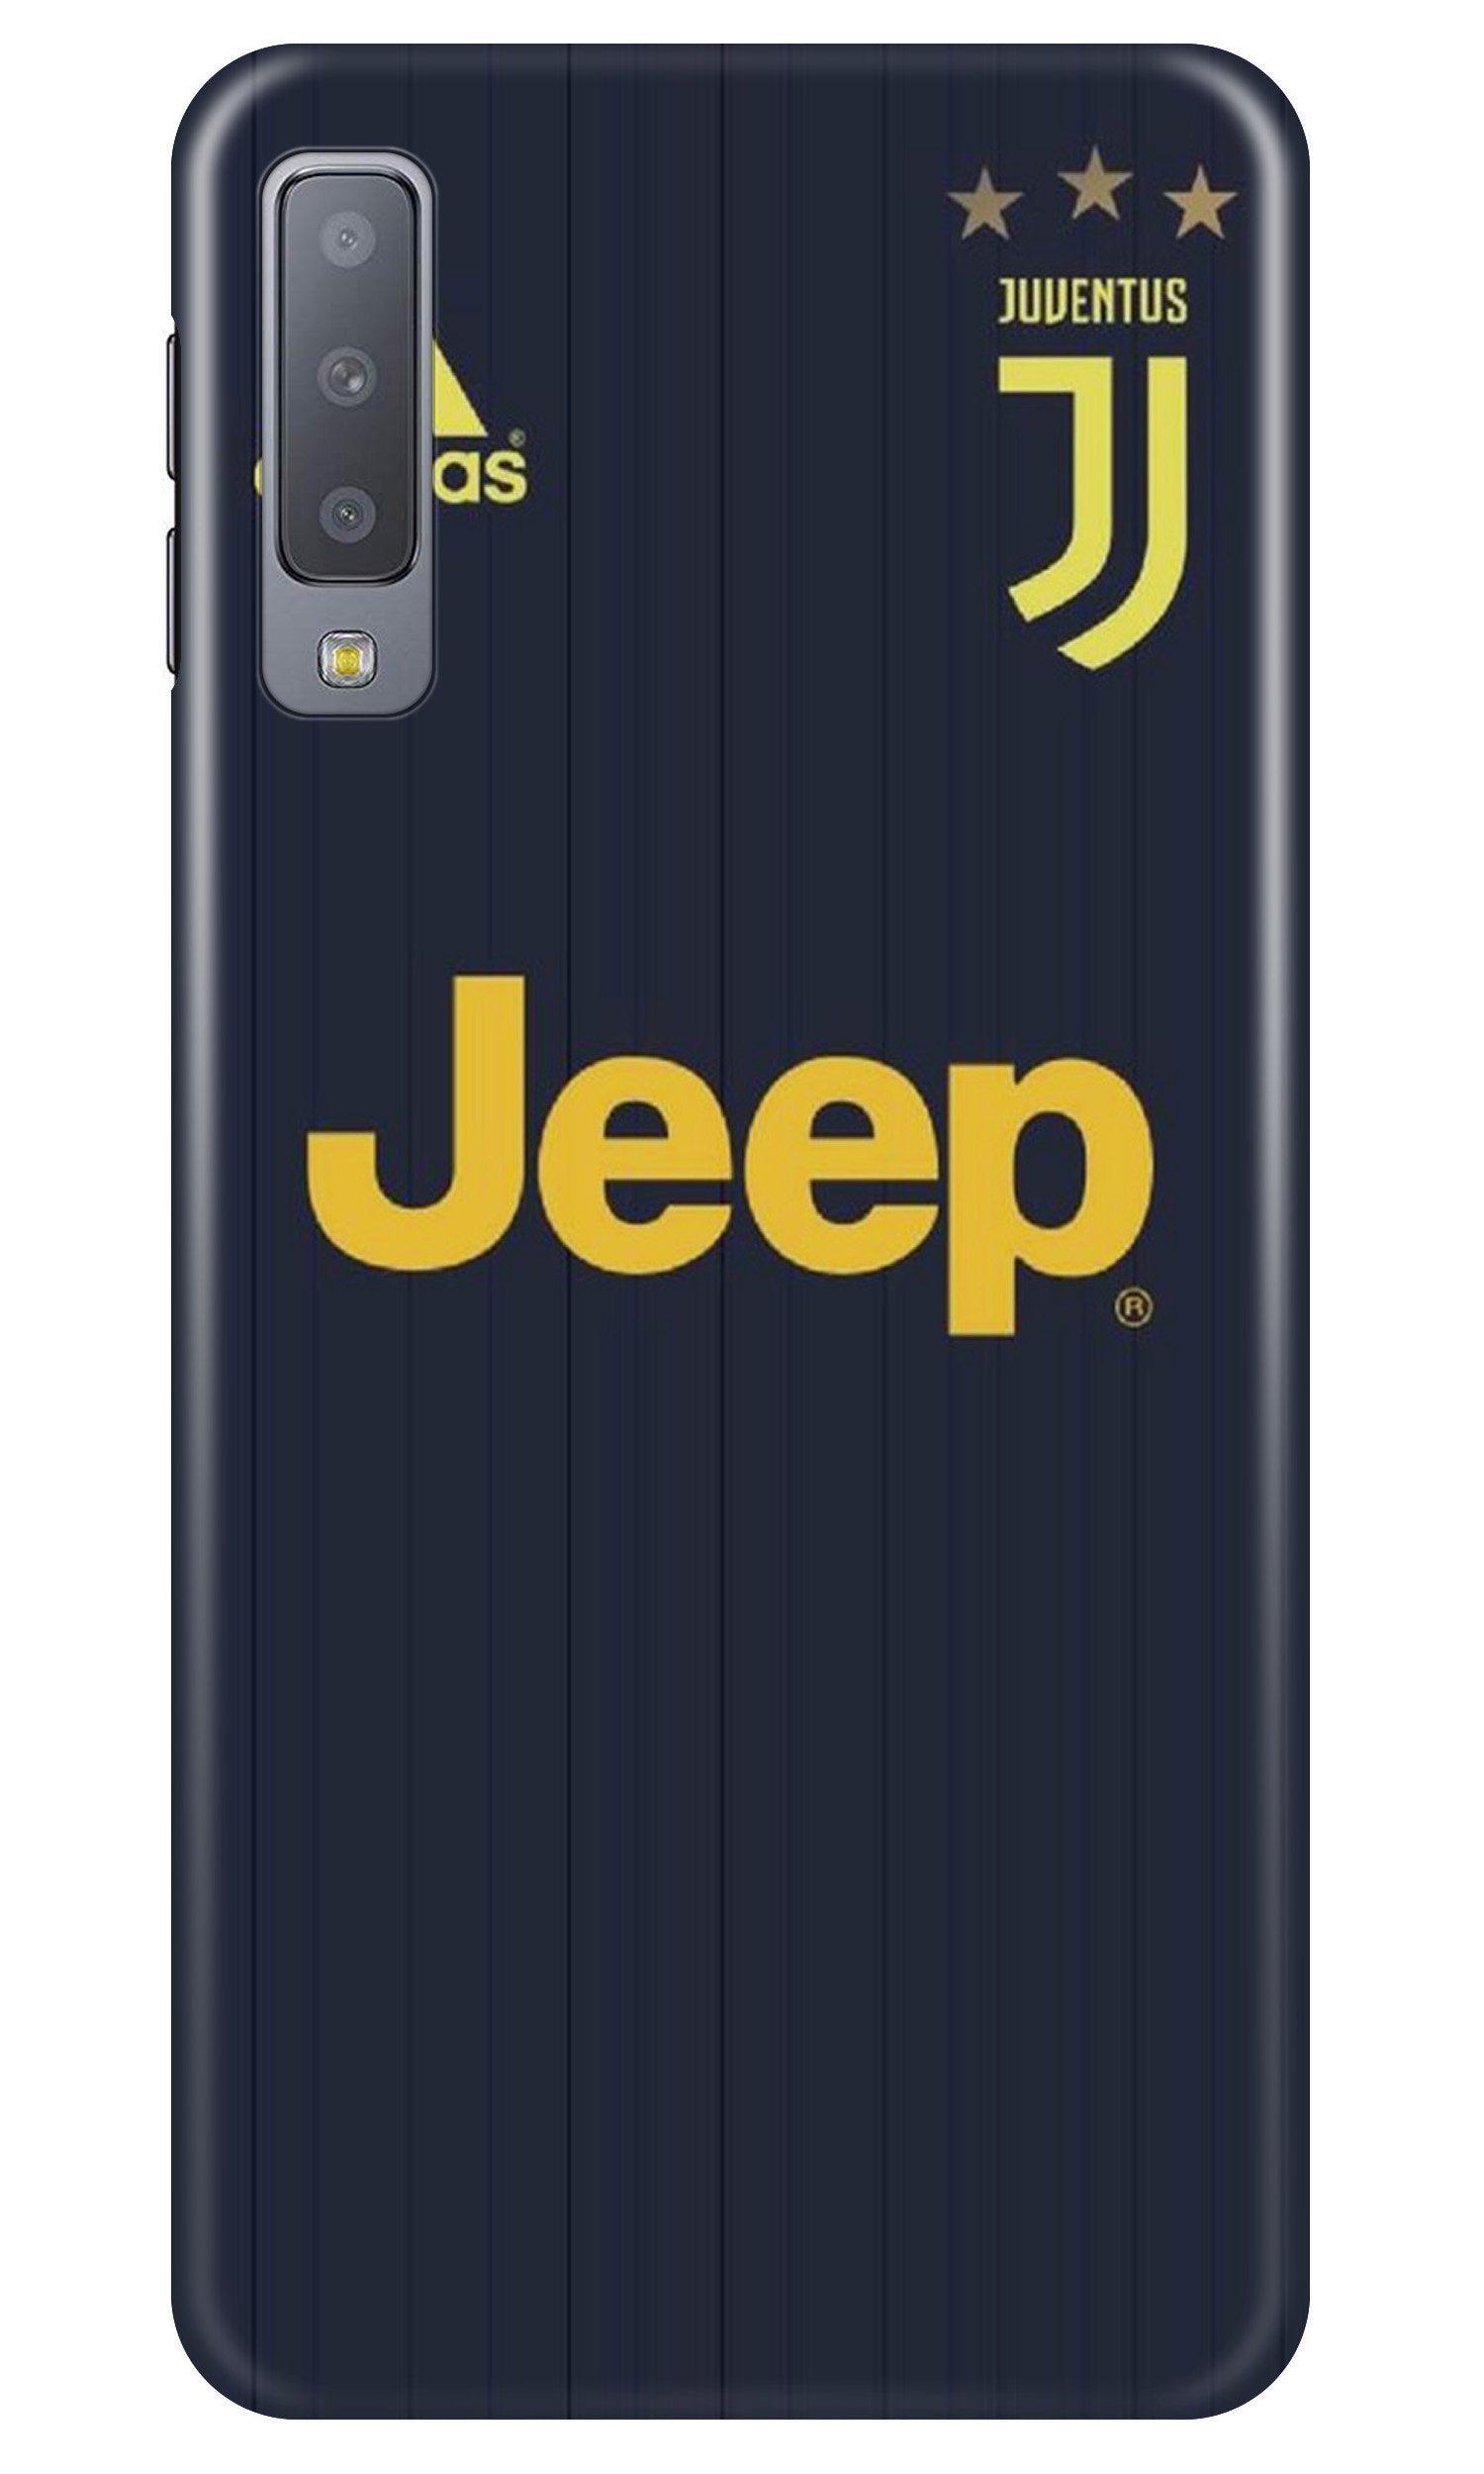 Jeep Juventus Case for Samung Galaxy A70s(Design - 161)